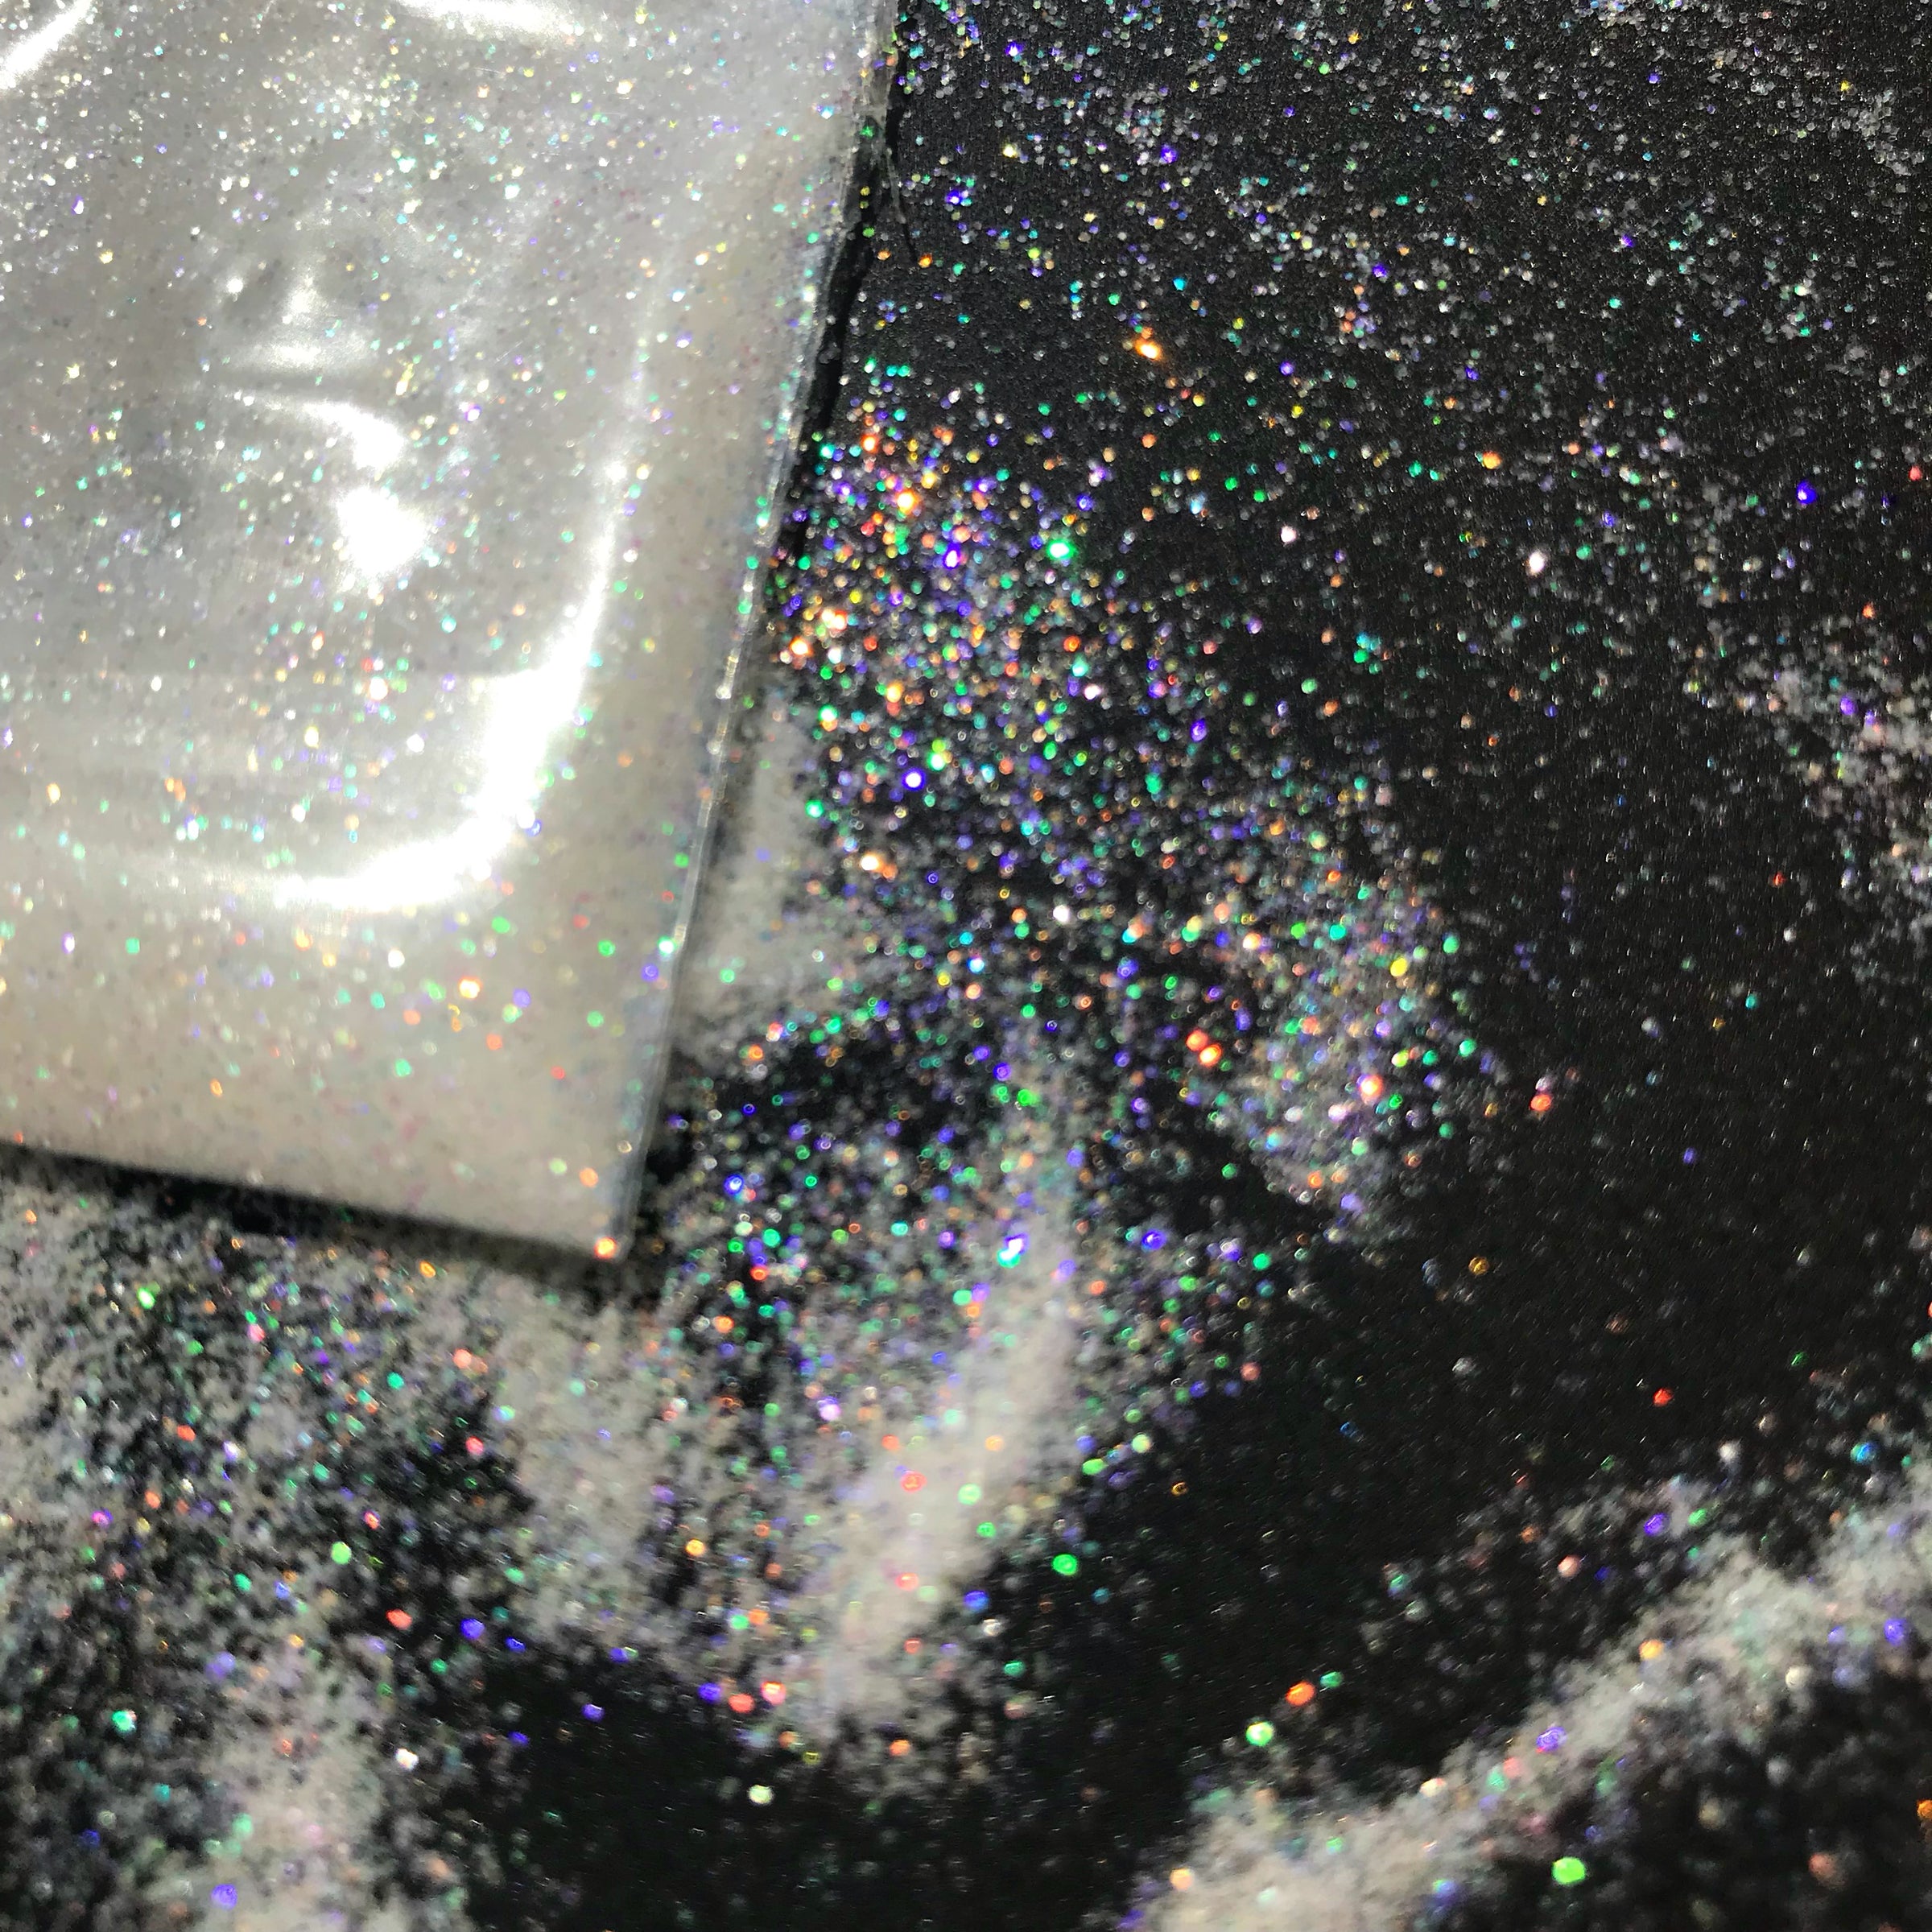 Unicorn Glitter - Clear Holo – KokoGlitterBel